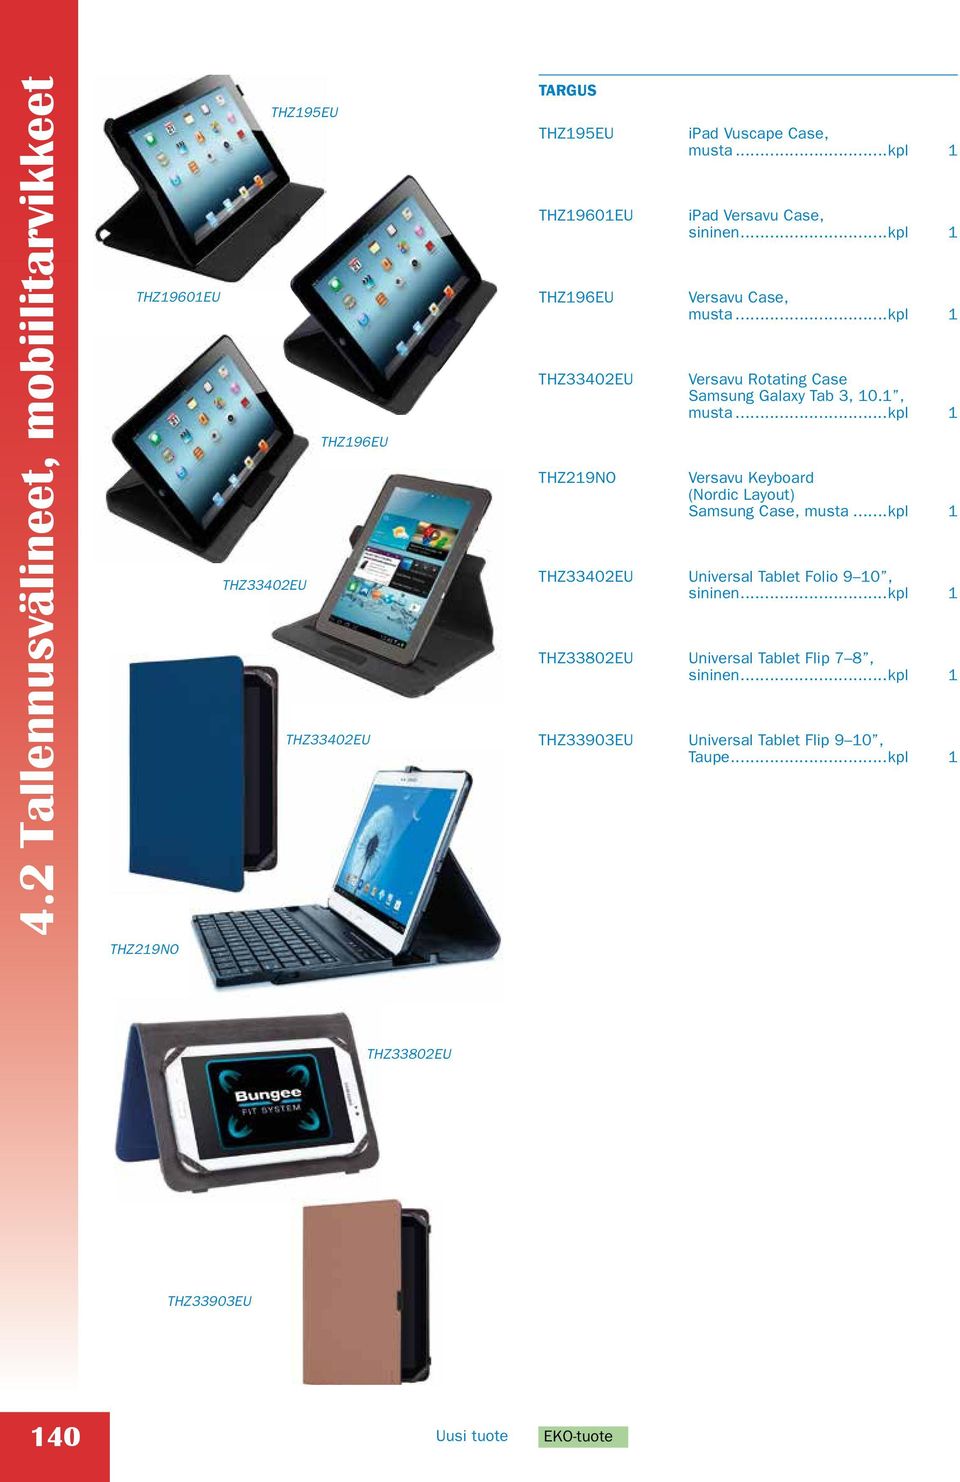 1, Versavu Keyboard (Nordic Layout) Samsung Case, musta...kpl 1 THZ33402EU Universal Tablet Folio 9 10, sininen.